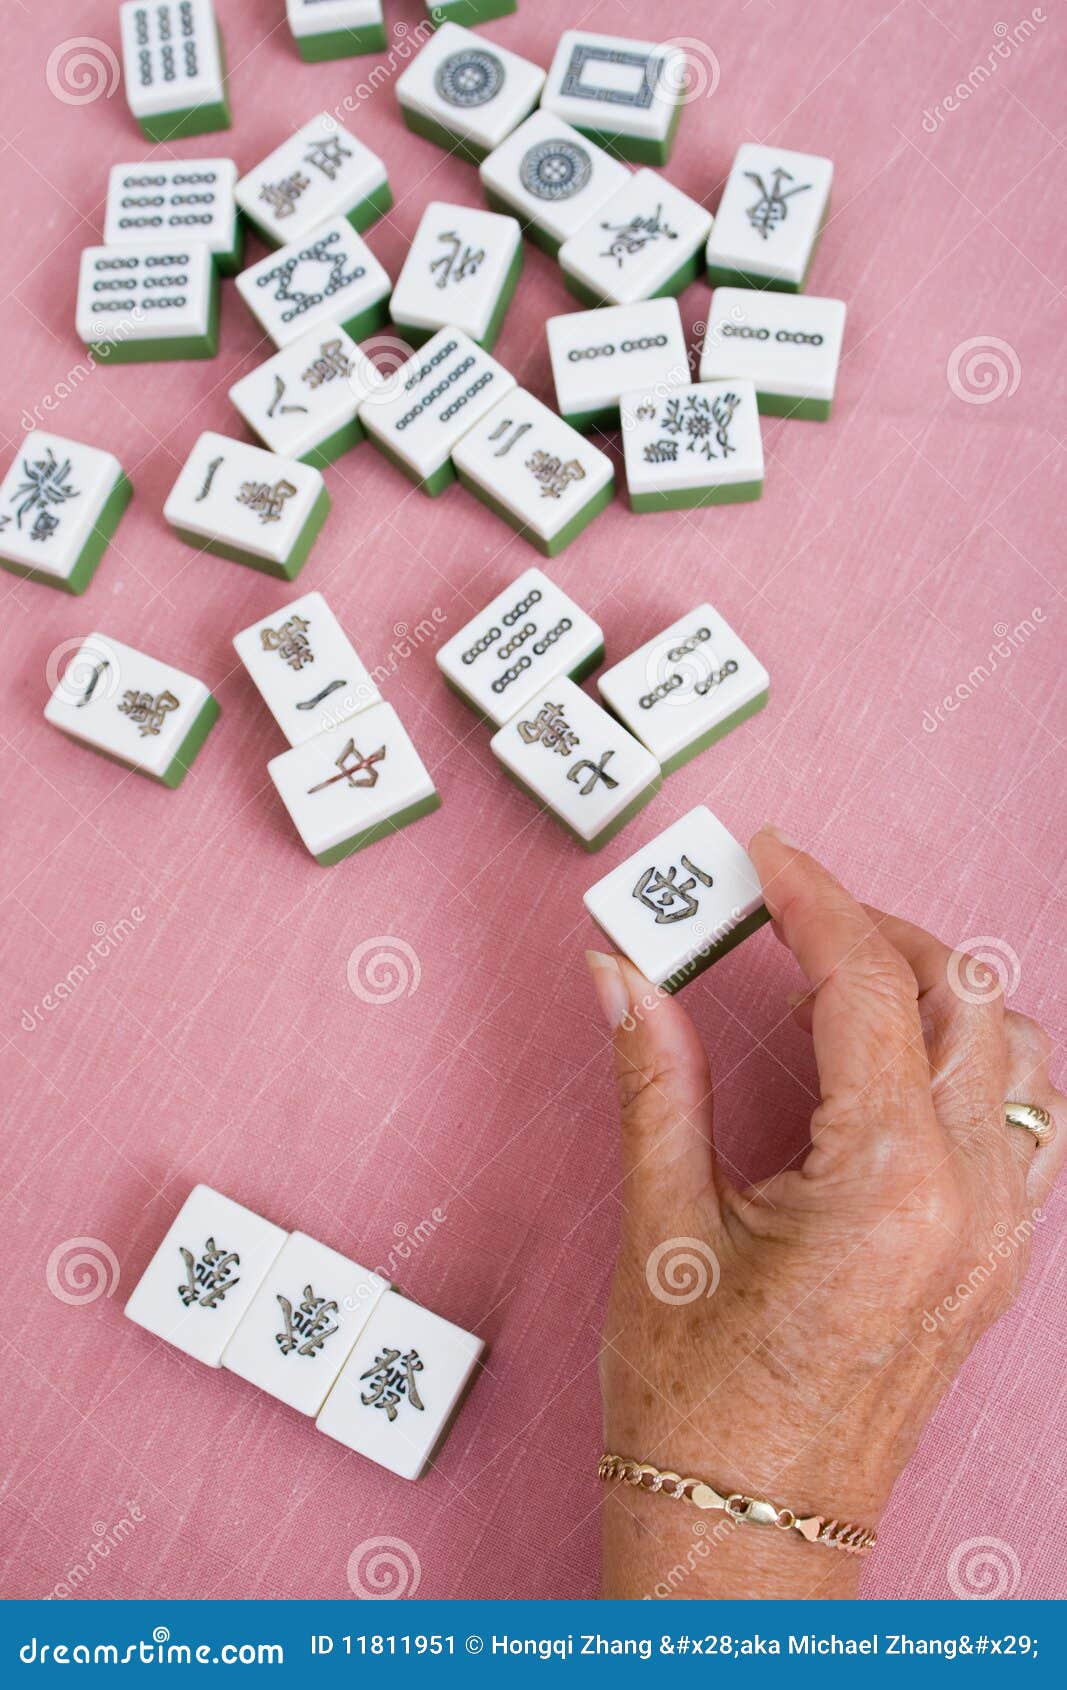 Mahjong Minimal